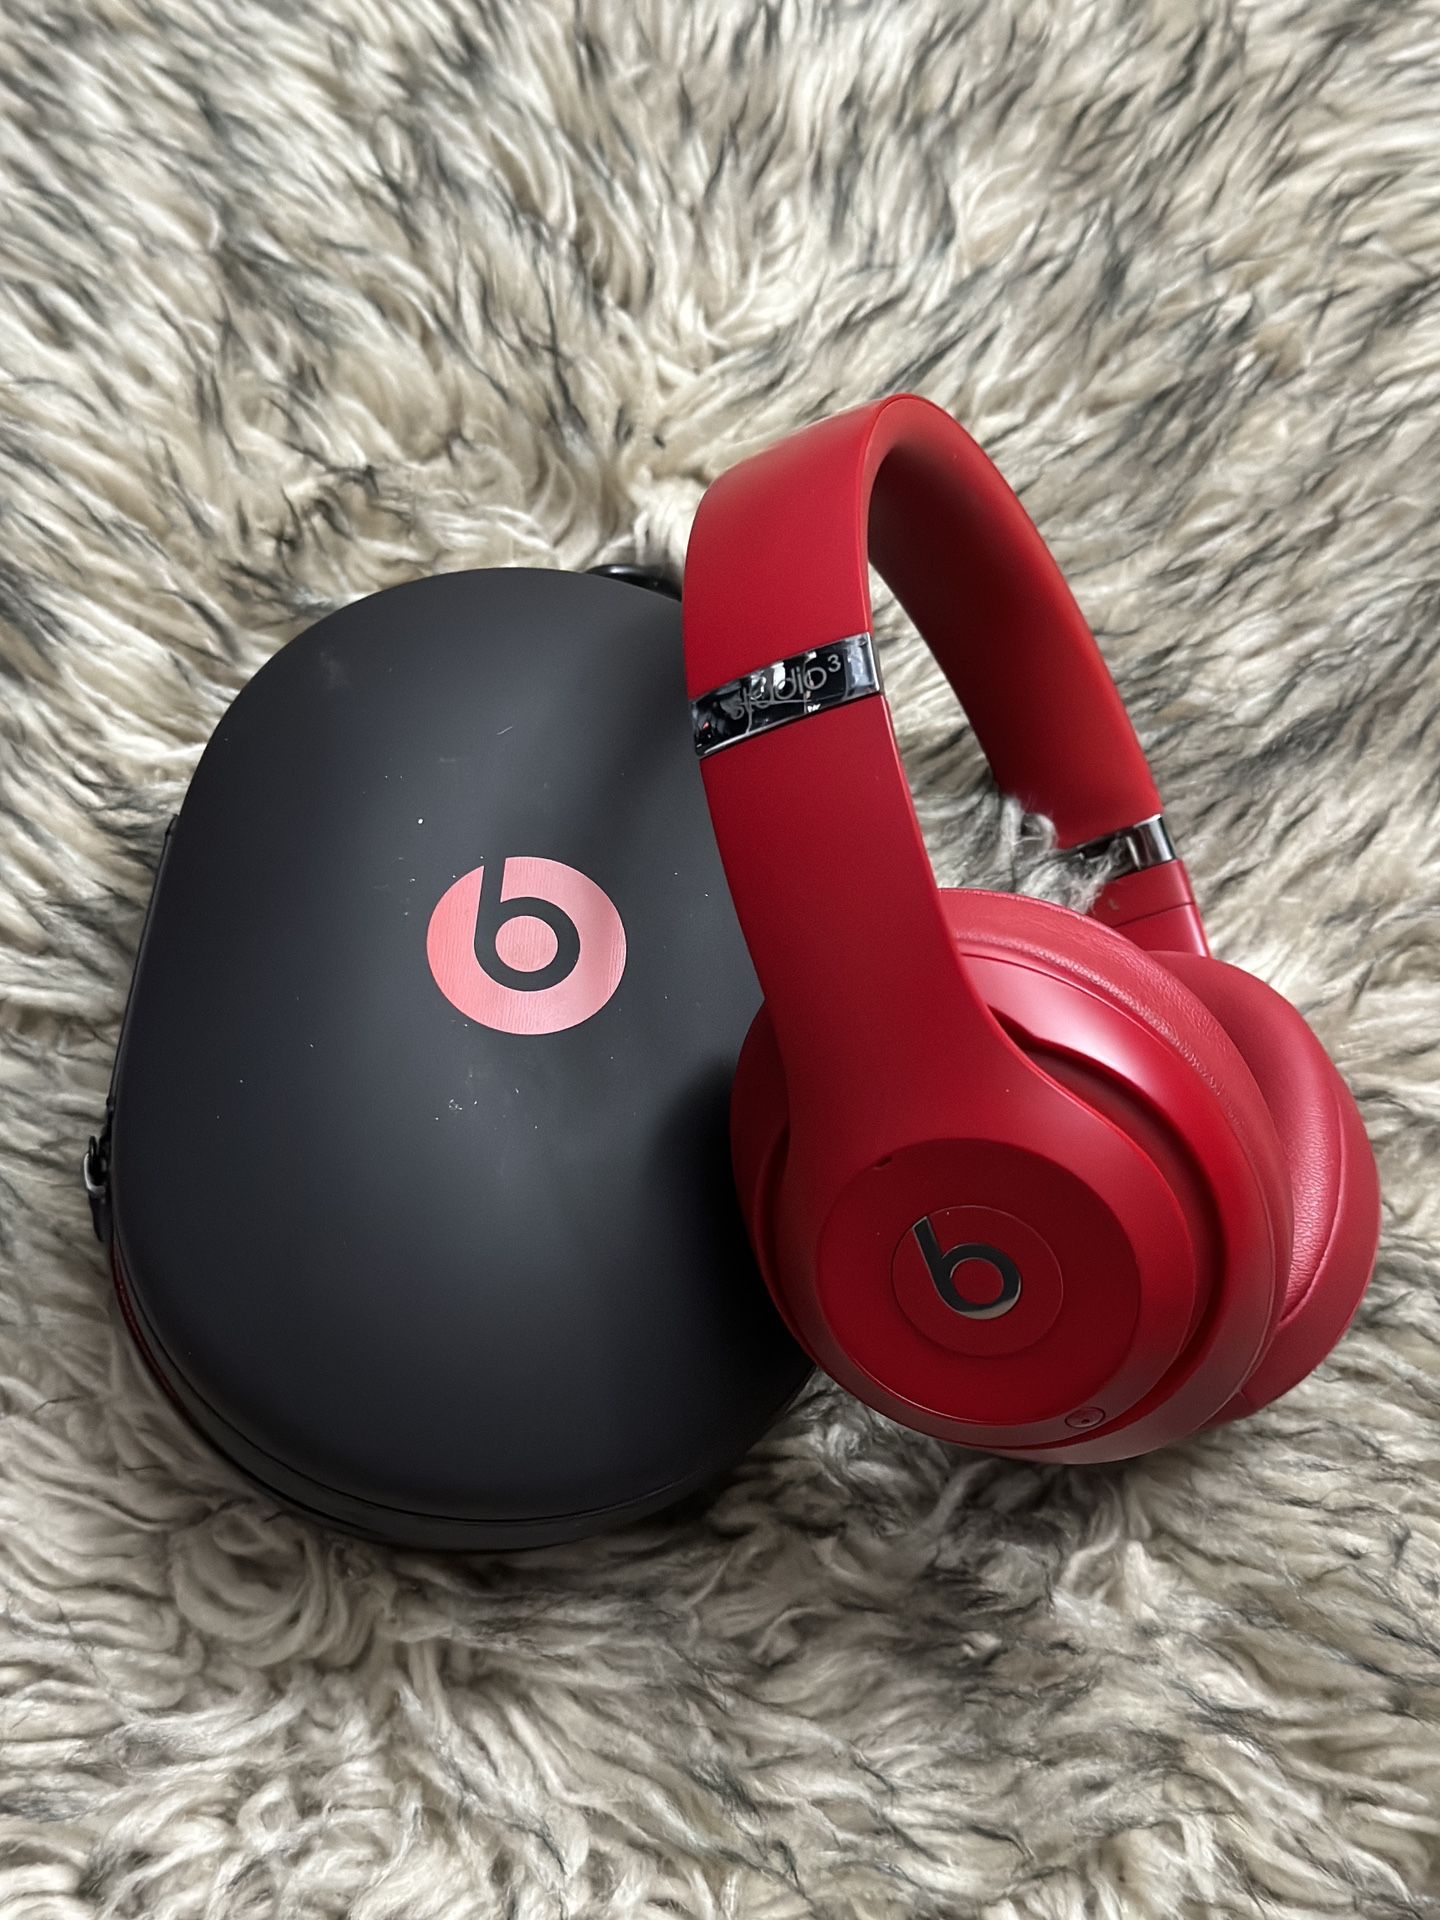 Beats Studio3 Wireless Noise Cancelling Over-Ear Headphones - Apple W1 Headphone Chip 